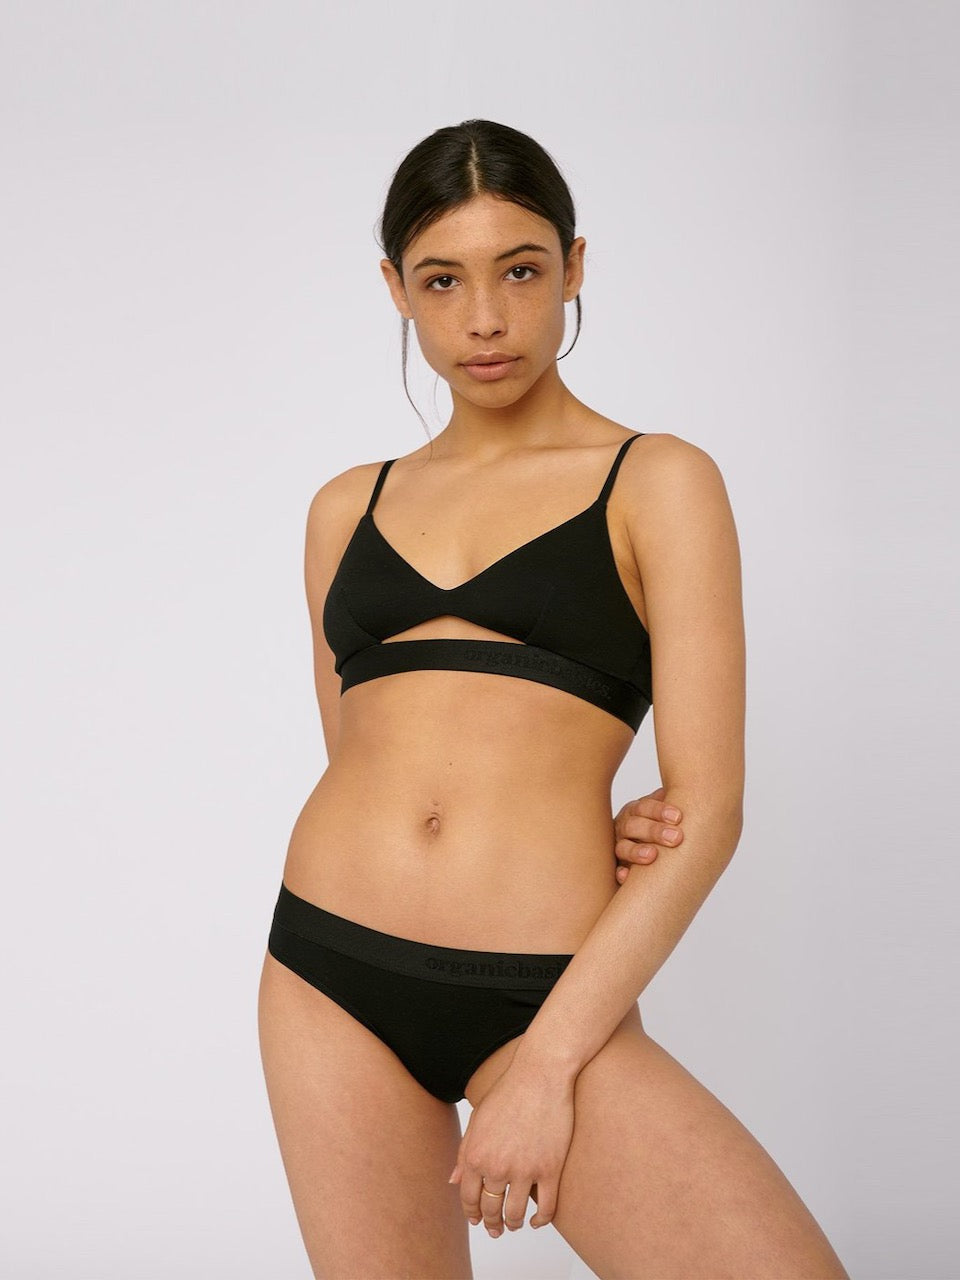 A woman wearing Organic Basics TENCEL™ Lite Briefs (2-pack) – Black bikini top and panties.